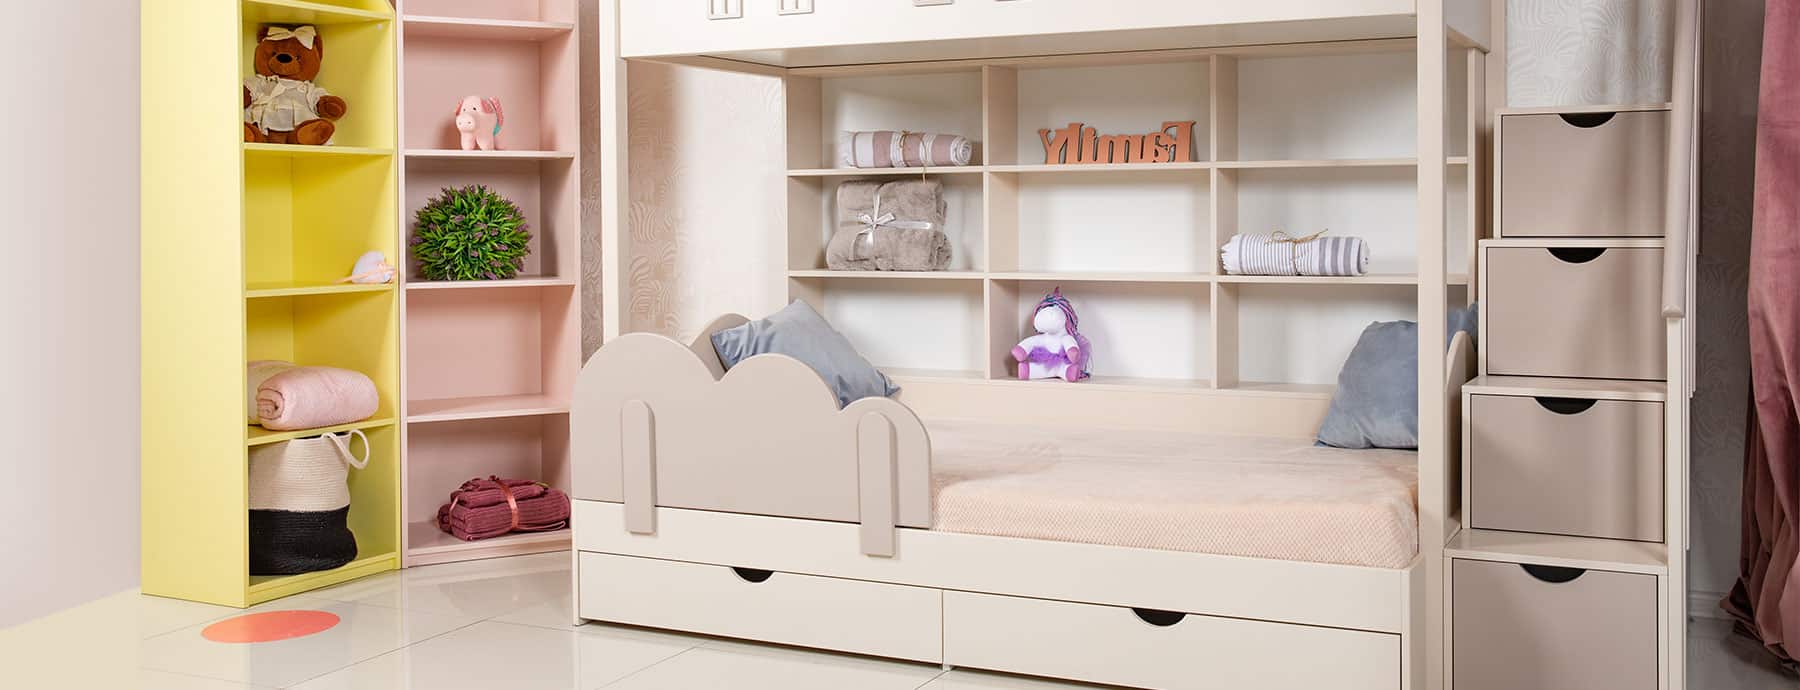 childrens bed with storage underneath